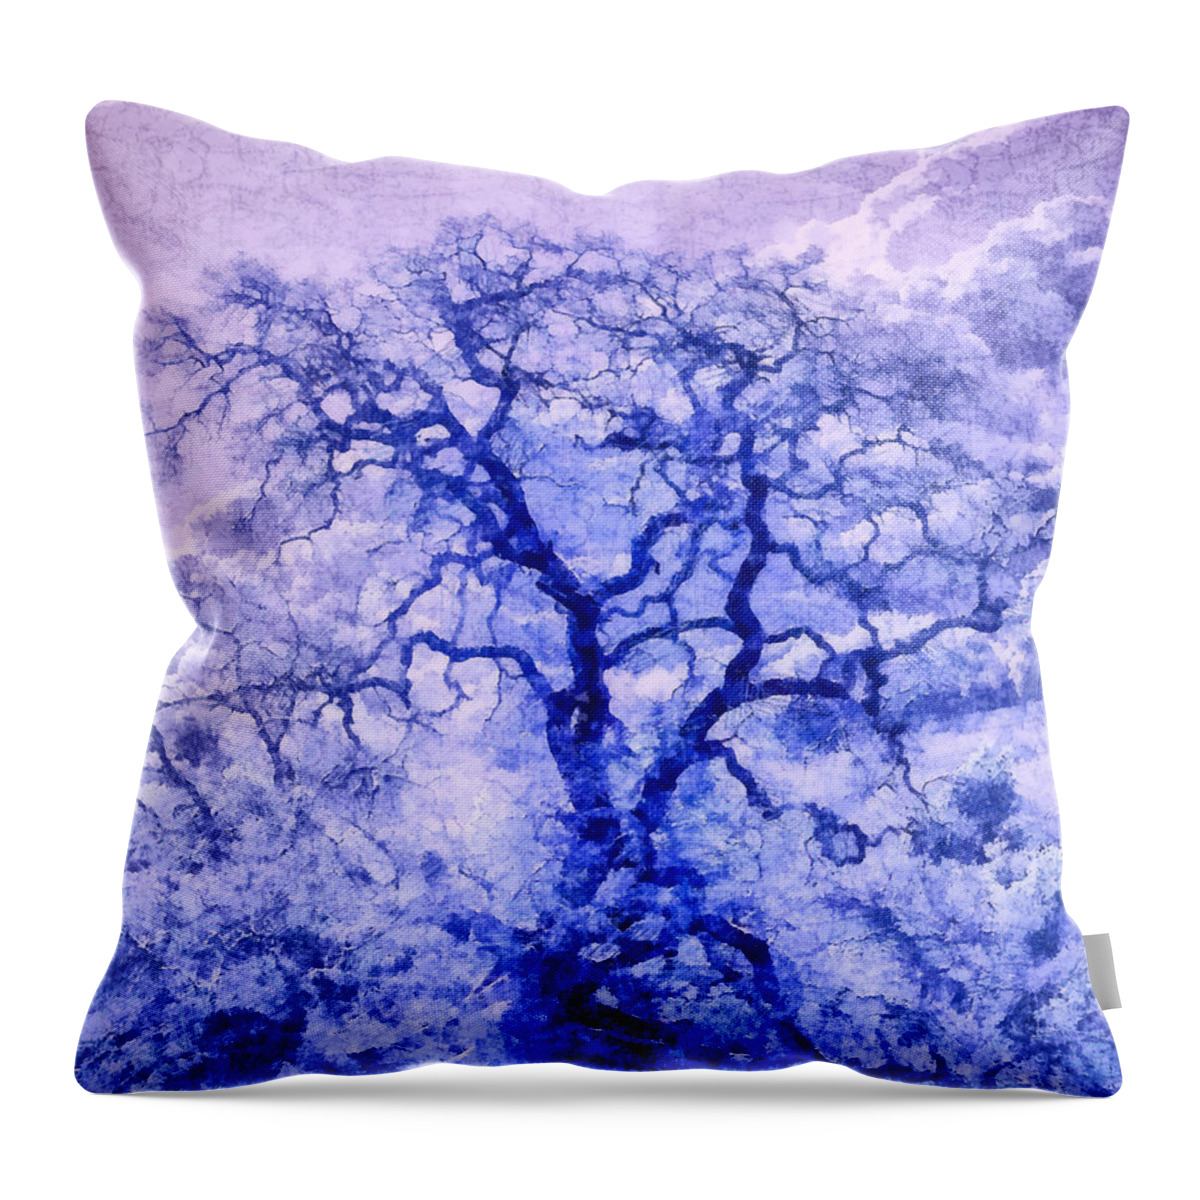 Nature Throw Pillow featuring the digital art Purple Oak Tree Dream by Priya Ghose